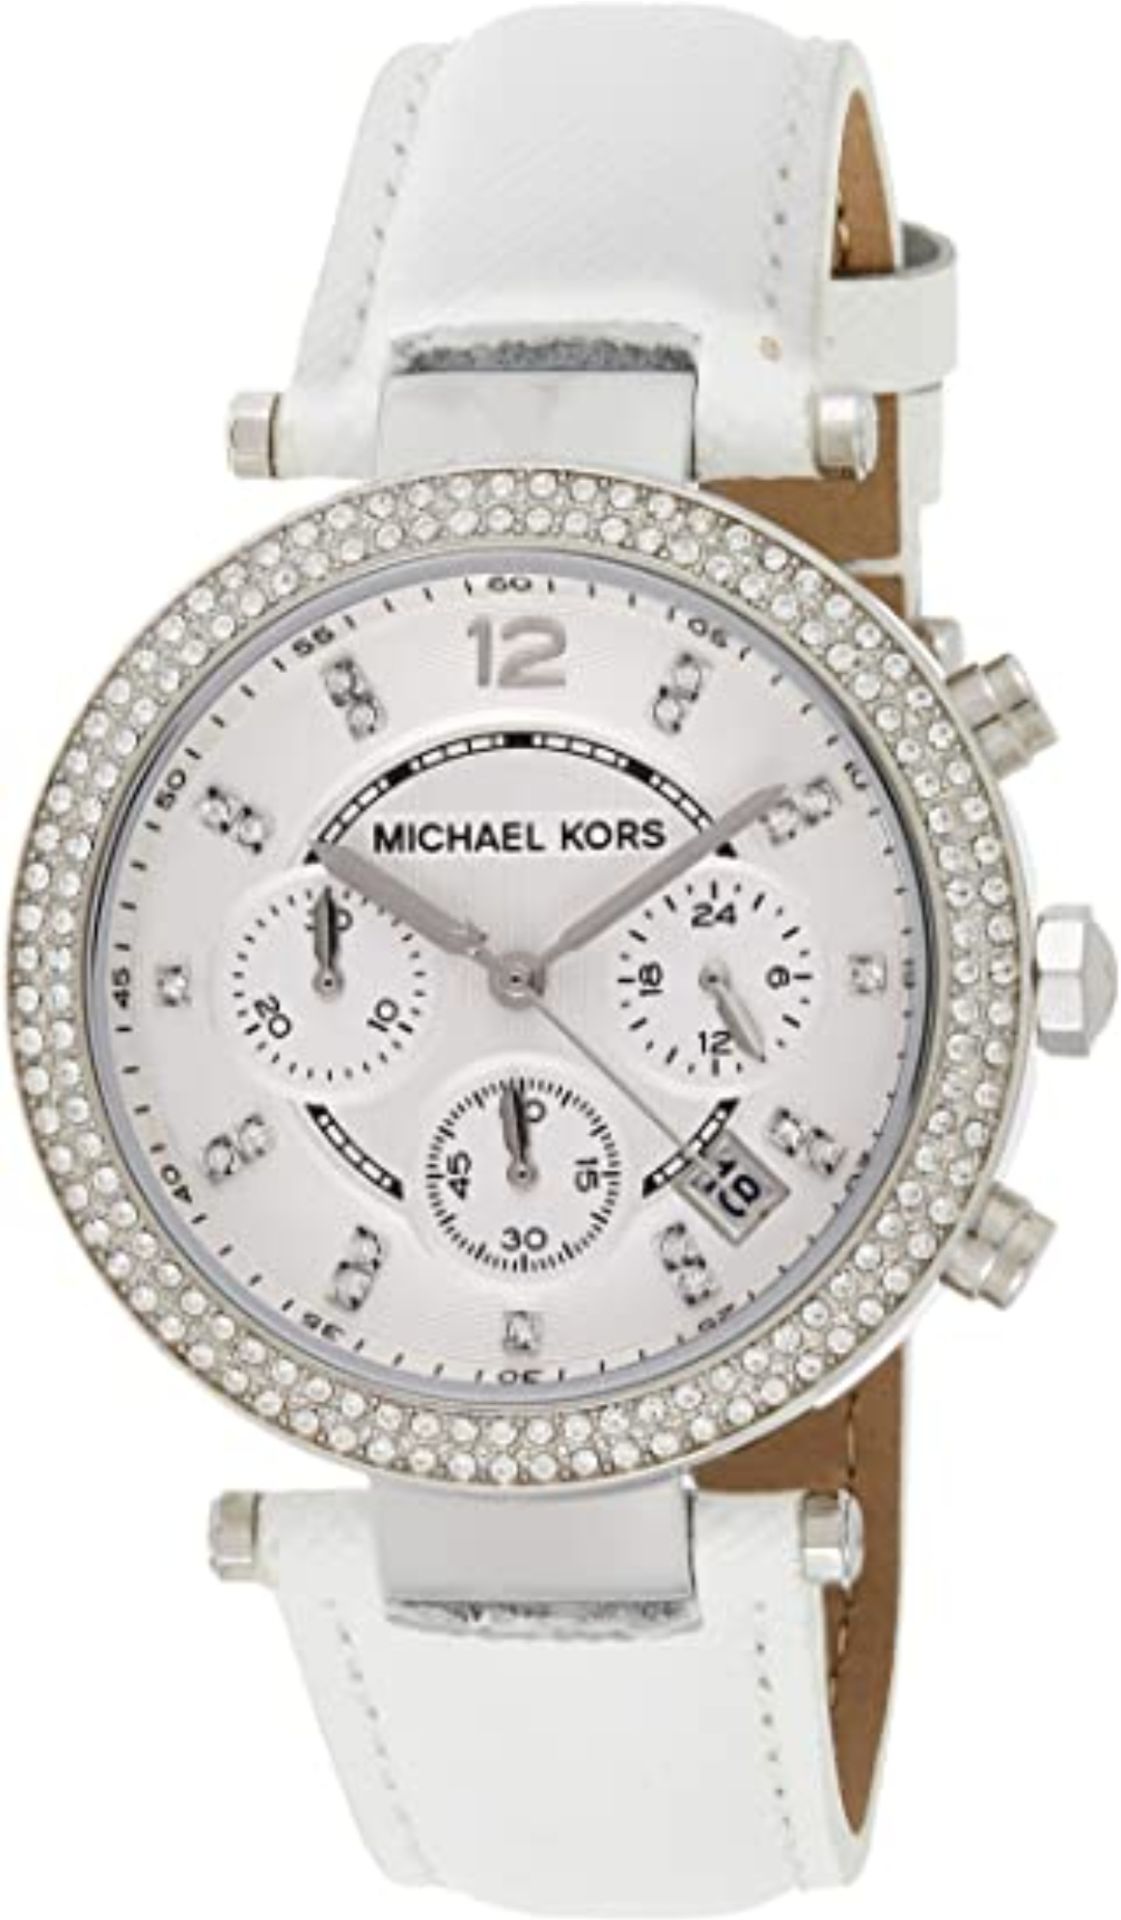 Michael Kors MK2277 Ladies Parker White Leather Strap quartz Chronograph Designer Watch - Image 2 of 8